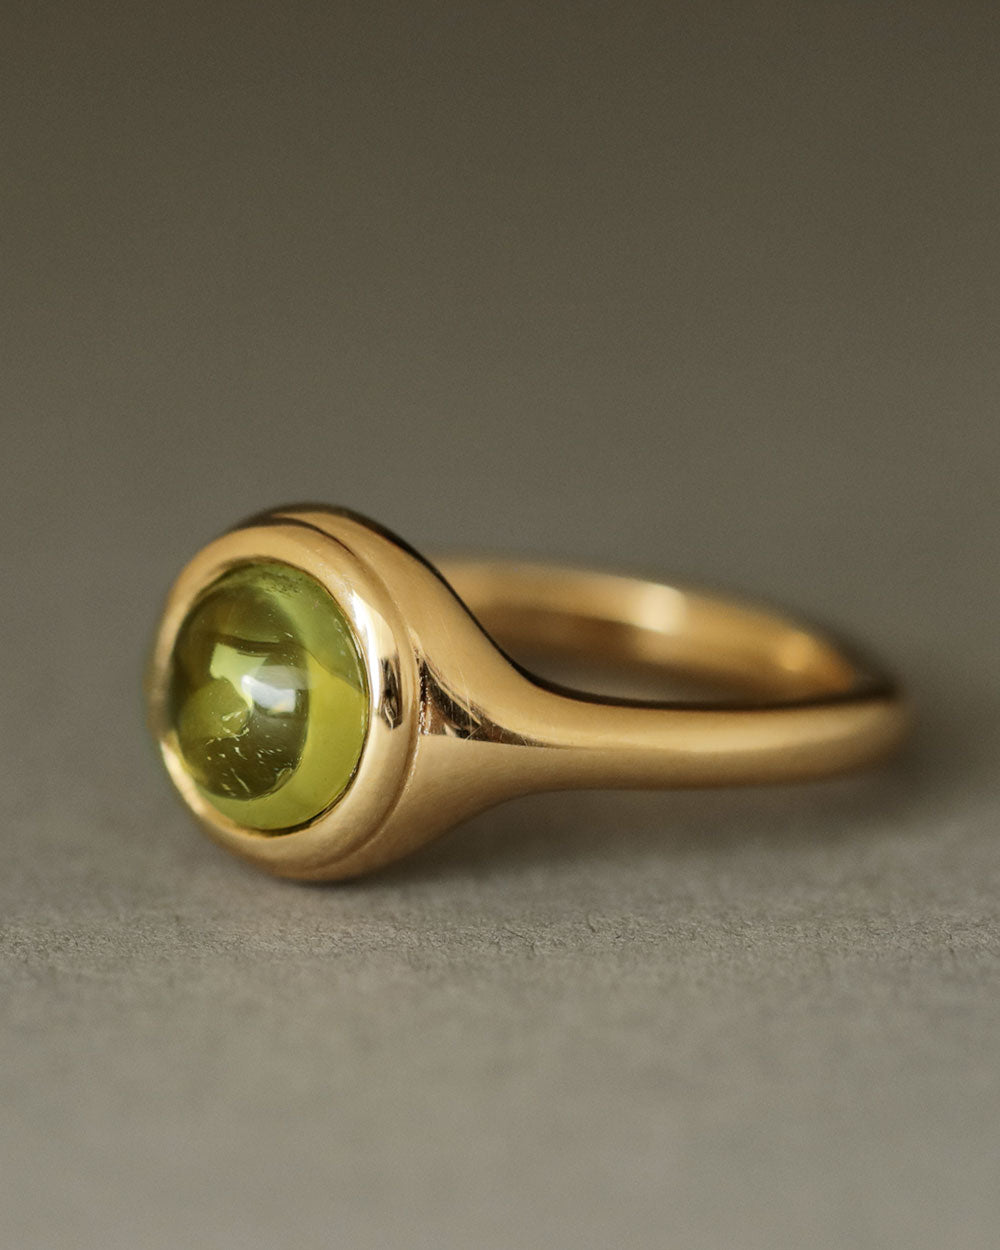 Noble Round Jali 22K Gold Ring – Andaaz Jewelers